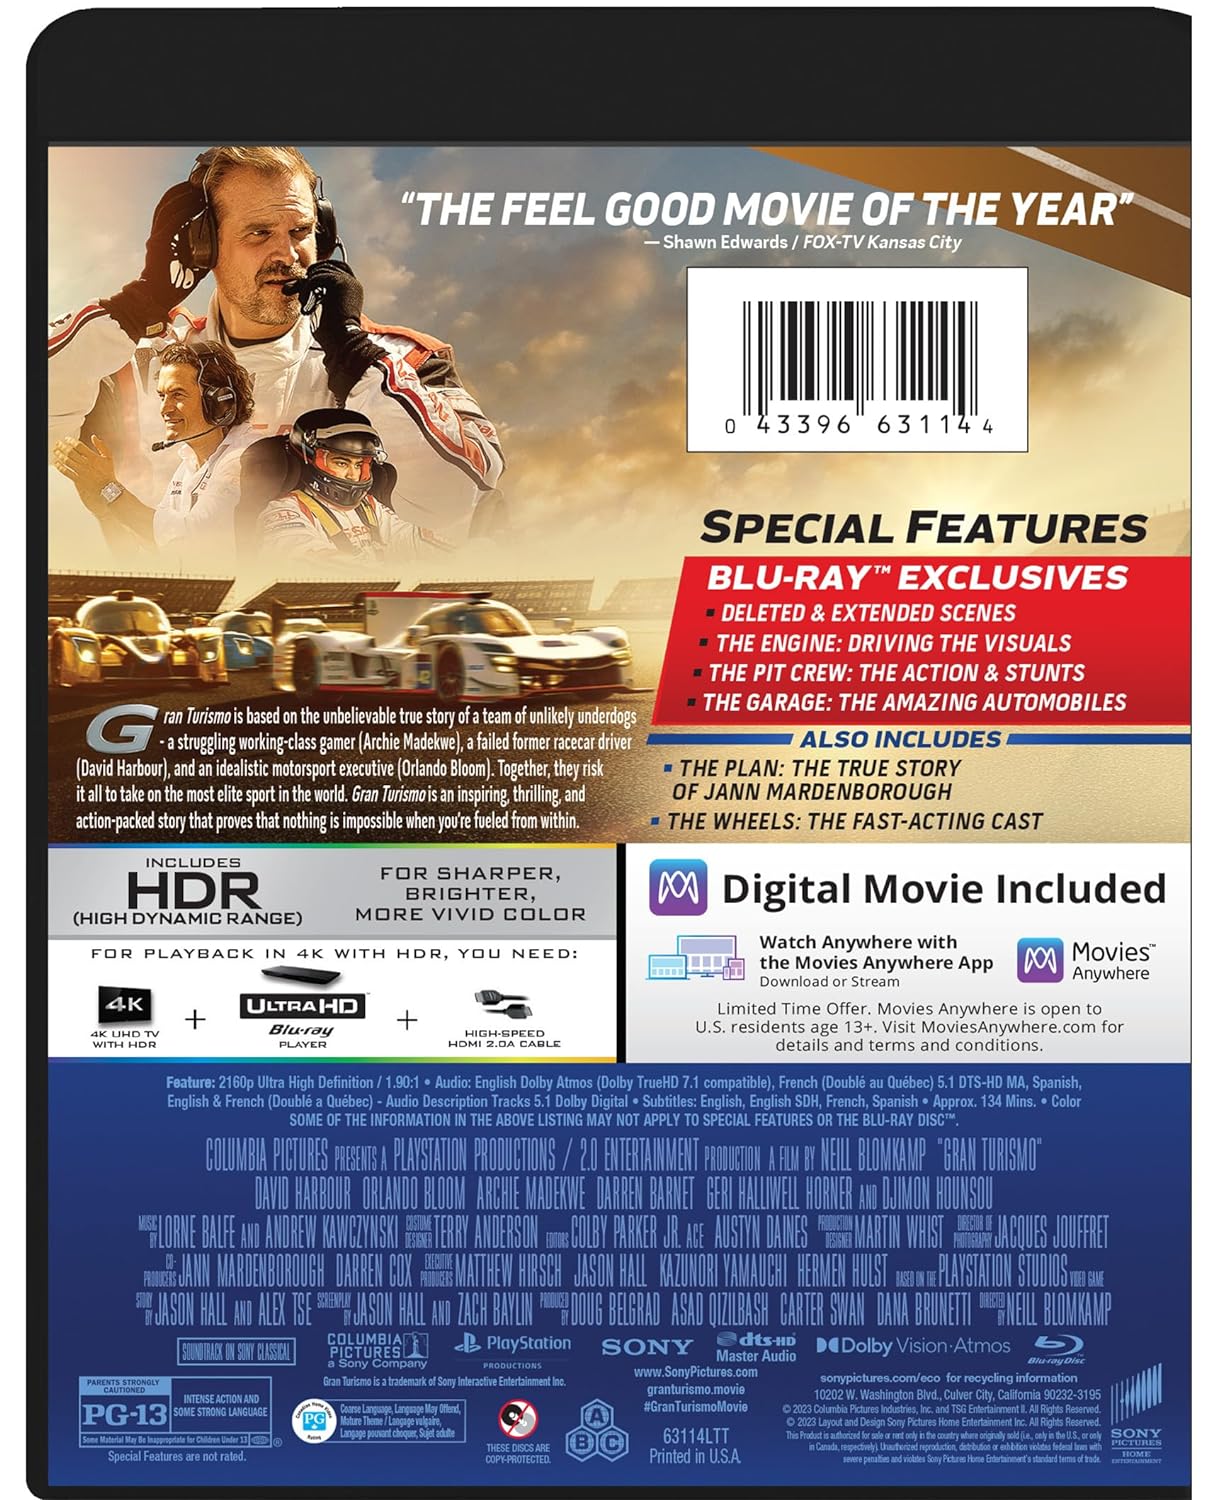 Gran Turismo - Films Action - Aventure DVD - Films DVD & Blu-ray